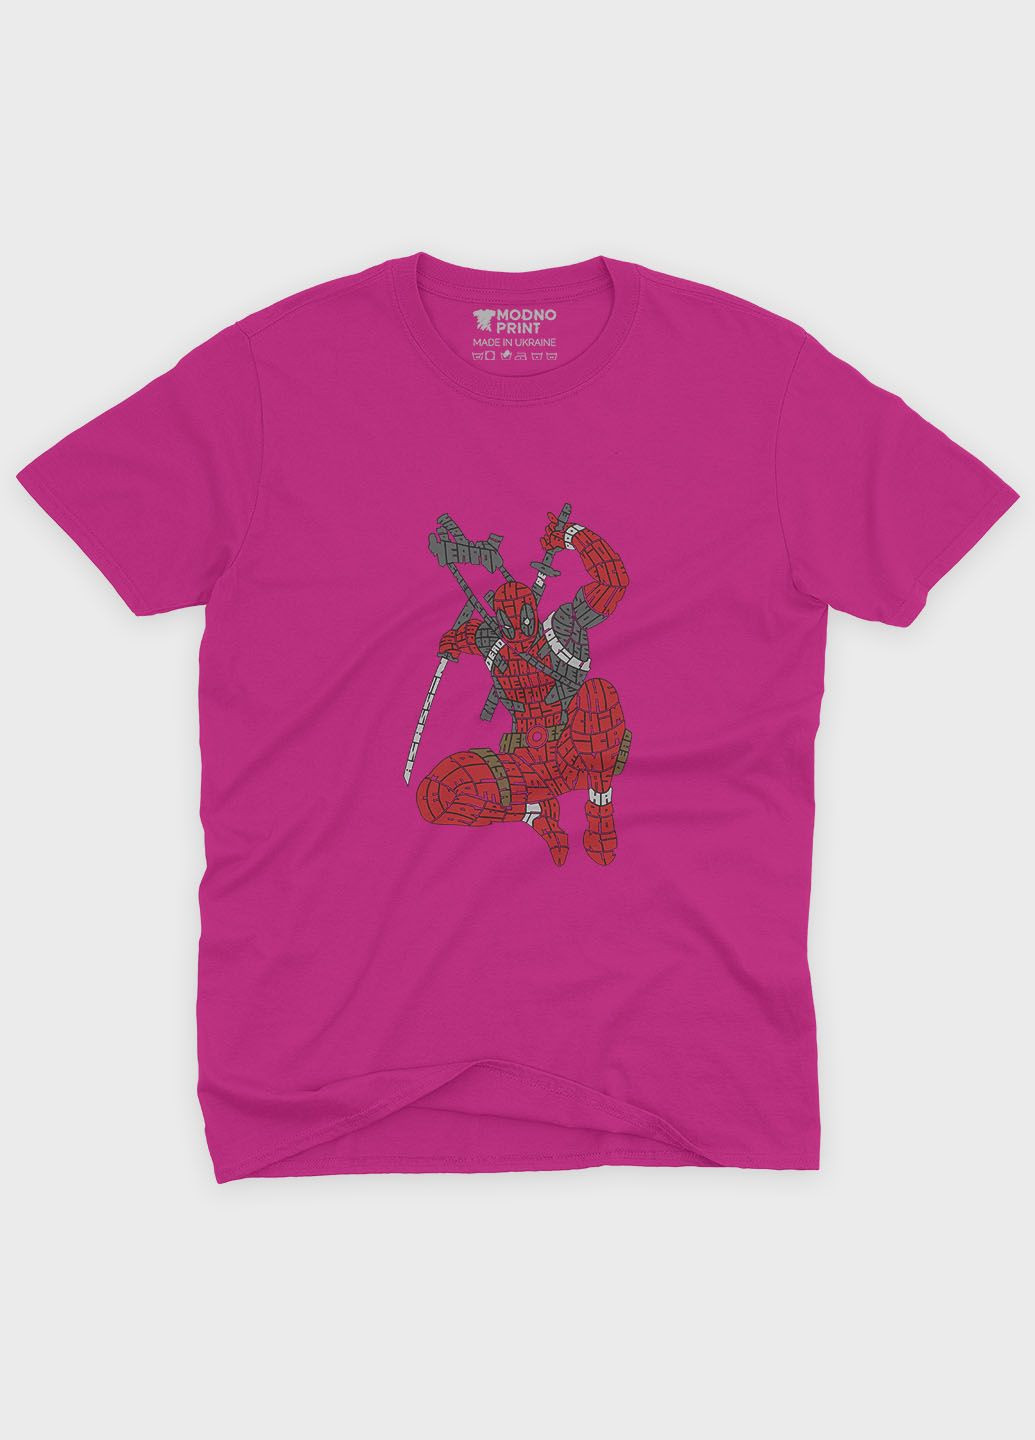 Розовая демисезонная футболка для мальчика с принтом антигероя - дедпул (ts001-1-fuxj-006-015-002-b) Modno